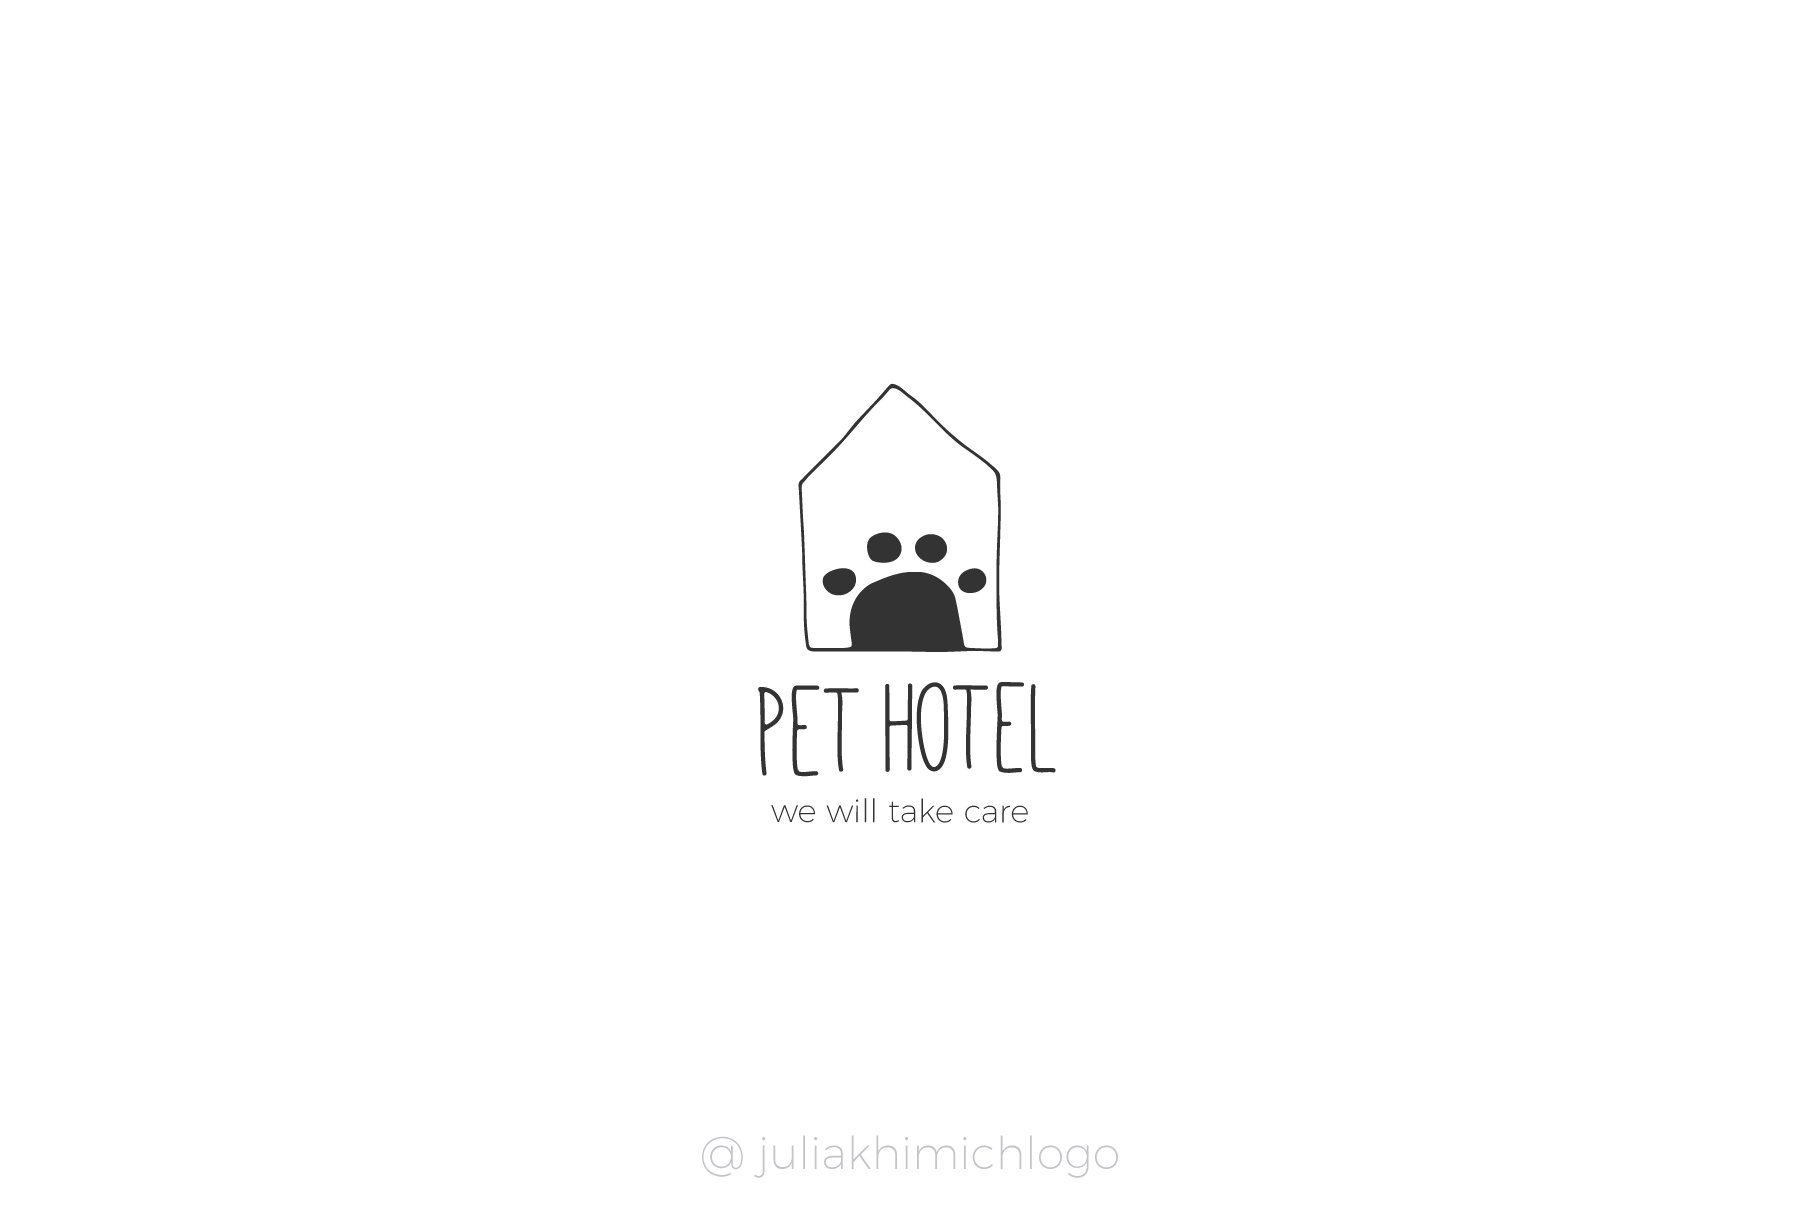 julia khihmic logo pack vol.3 pets logo preview 17 960